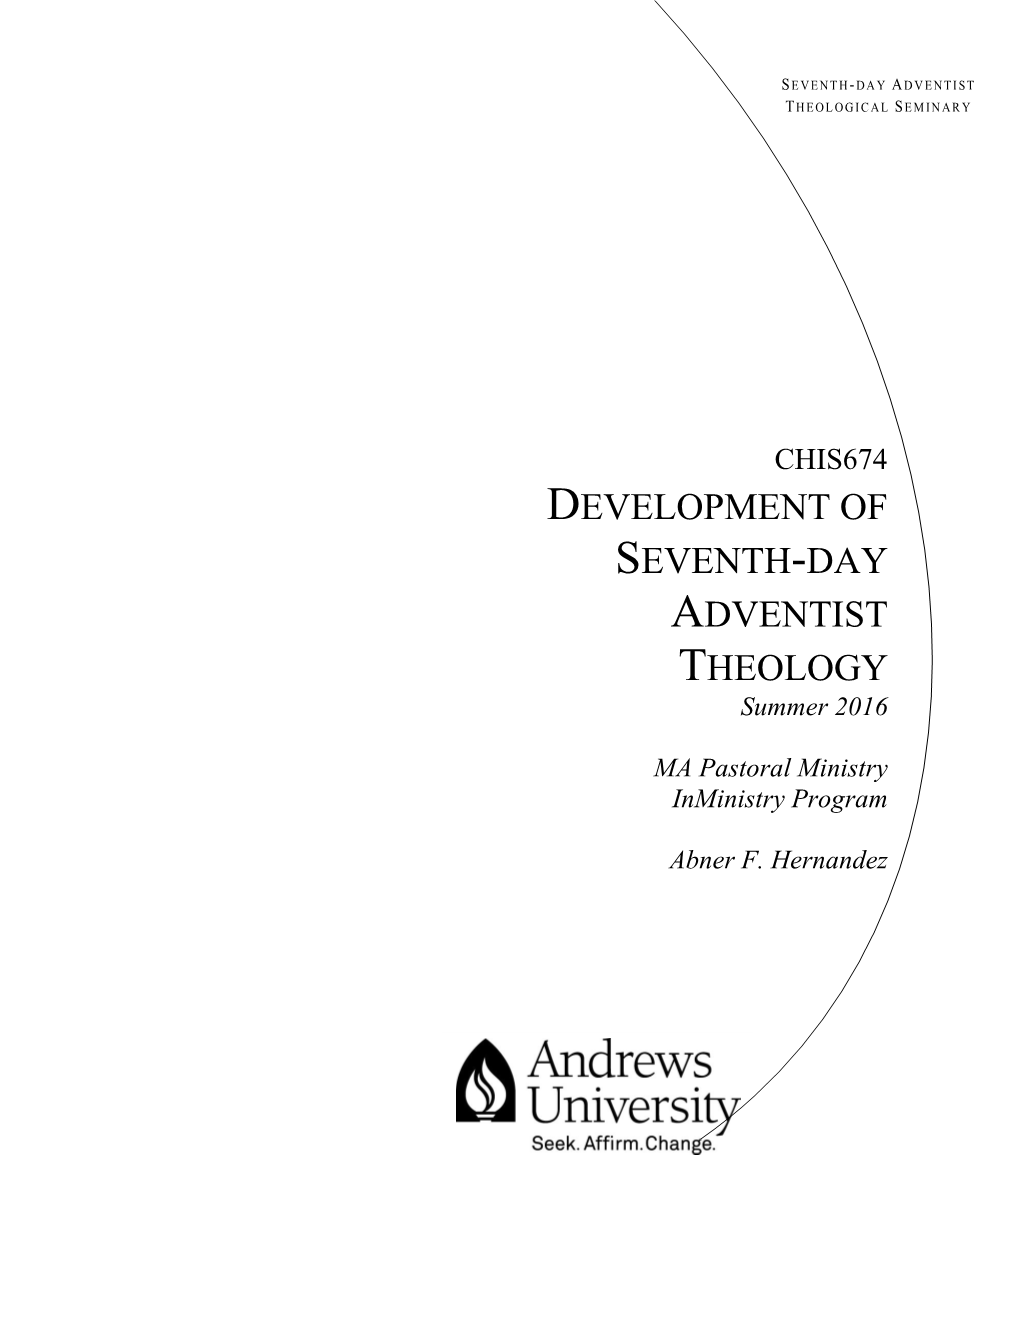 DEVELOPMENT of SEVENTH-DAY ADVENTIST THEOLOGY Summer 2016